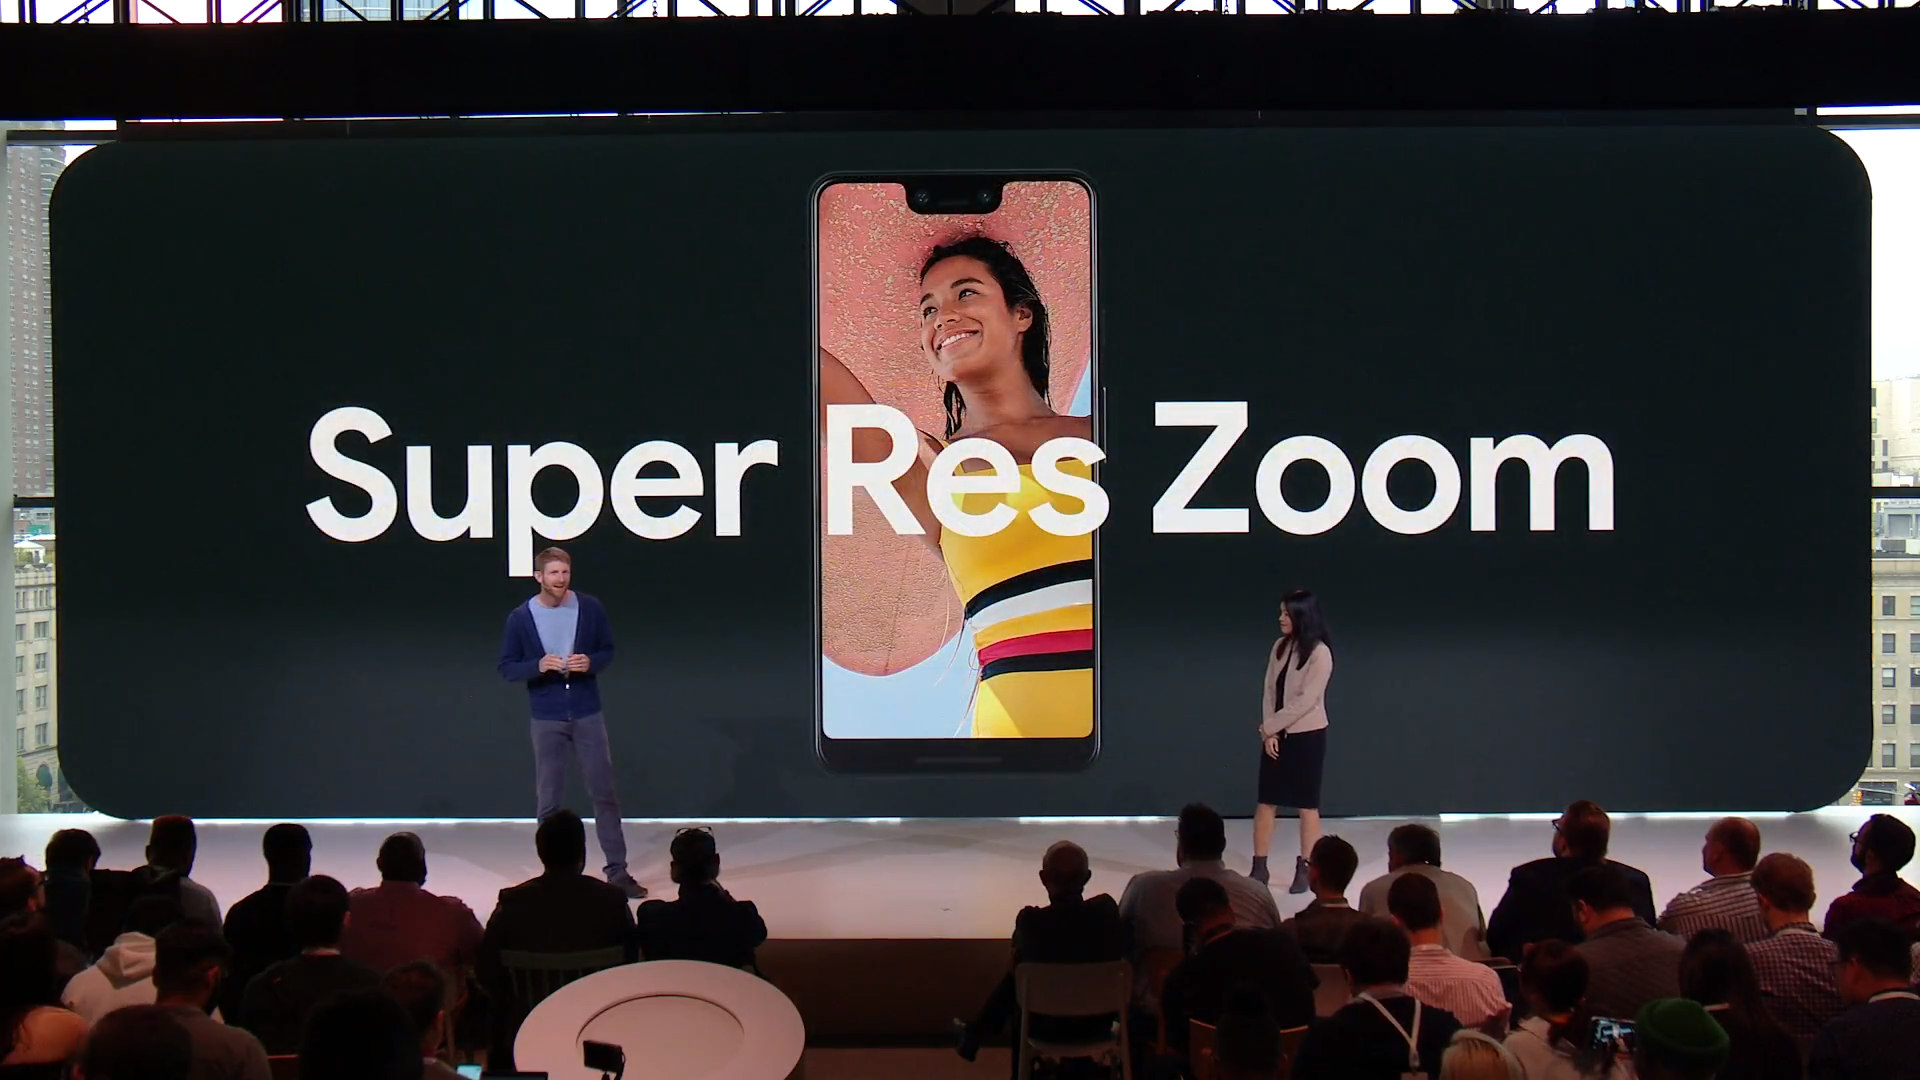 Super Res Zoom function on Google Pixel 3.